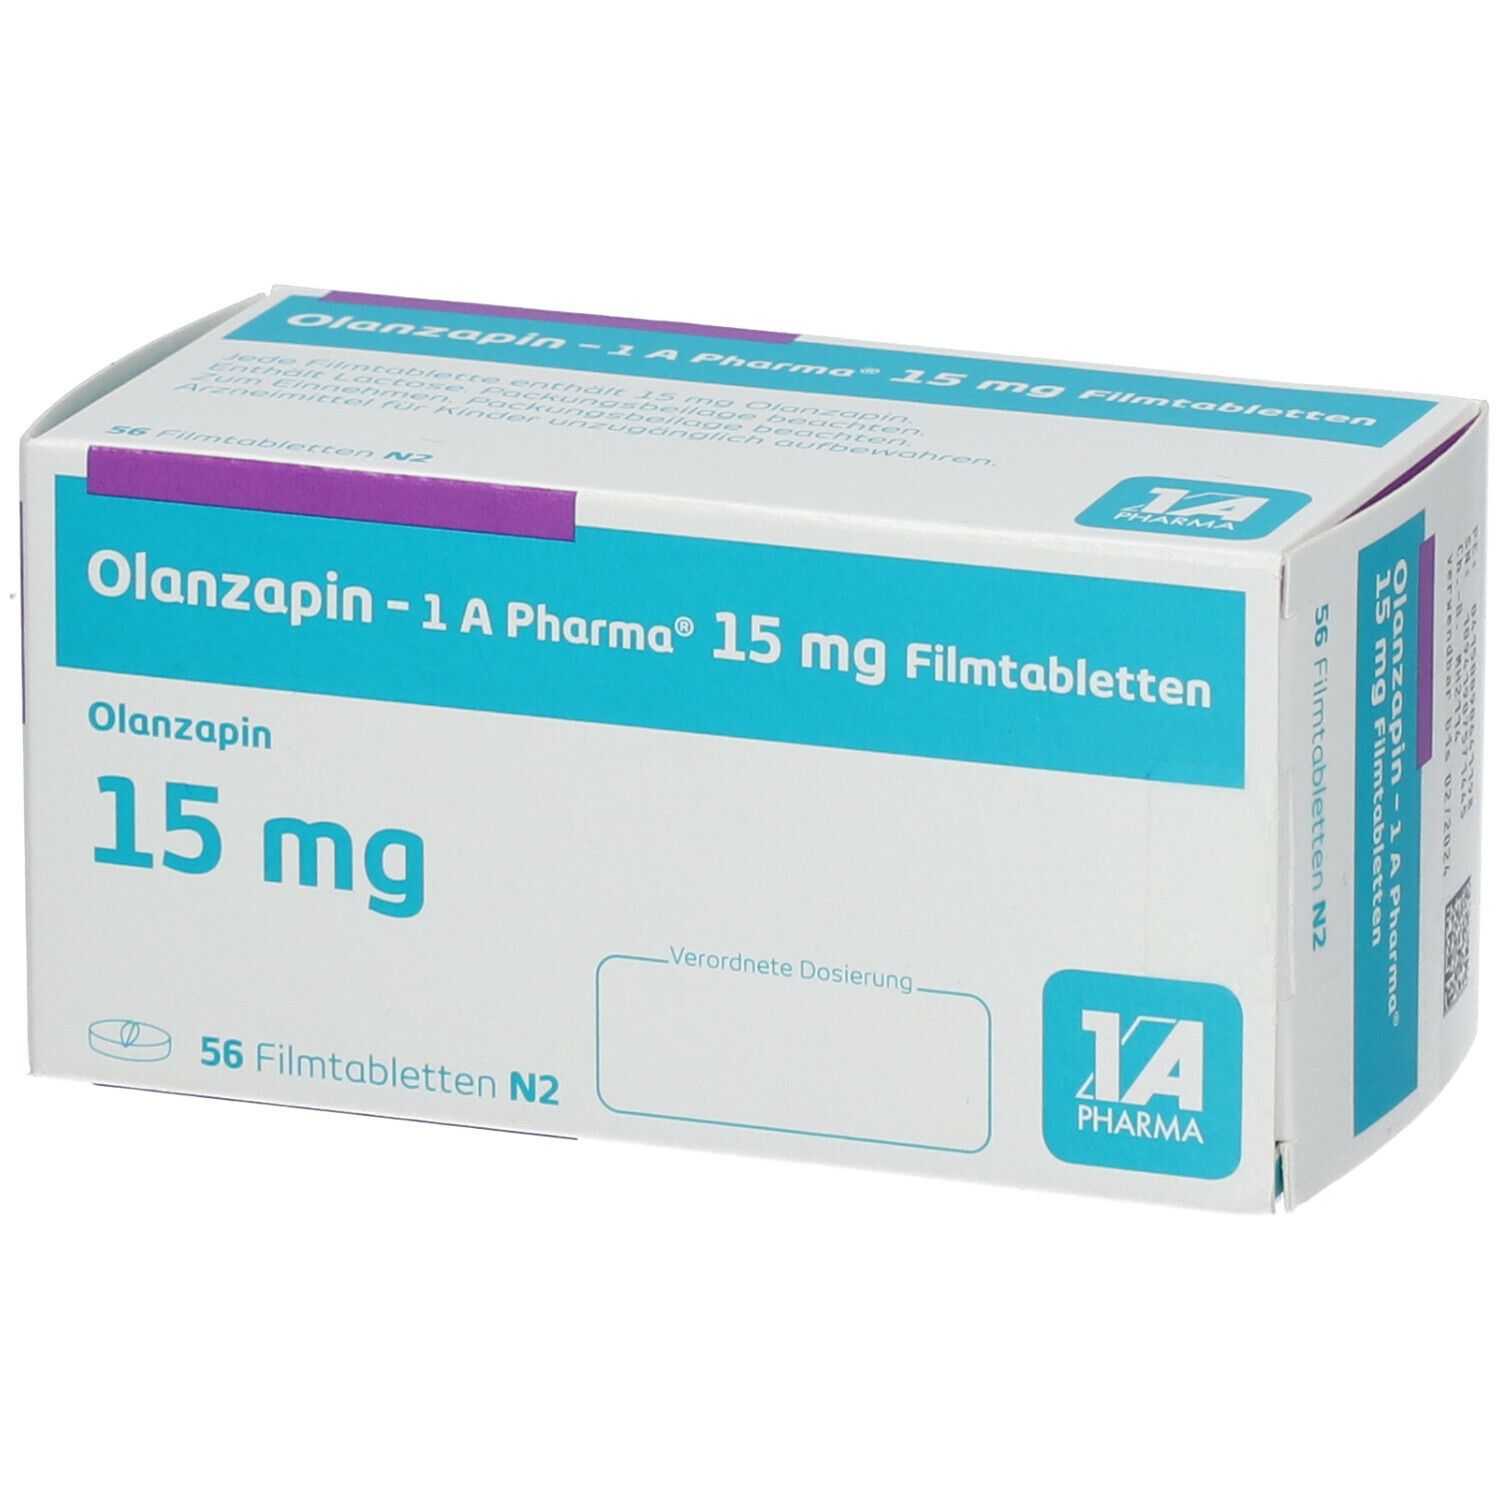 Olanzapin - 1 A Pharma® 15 mg